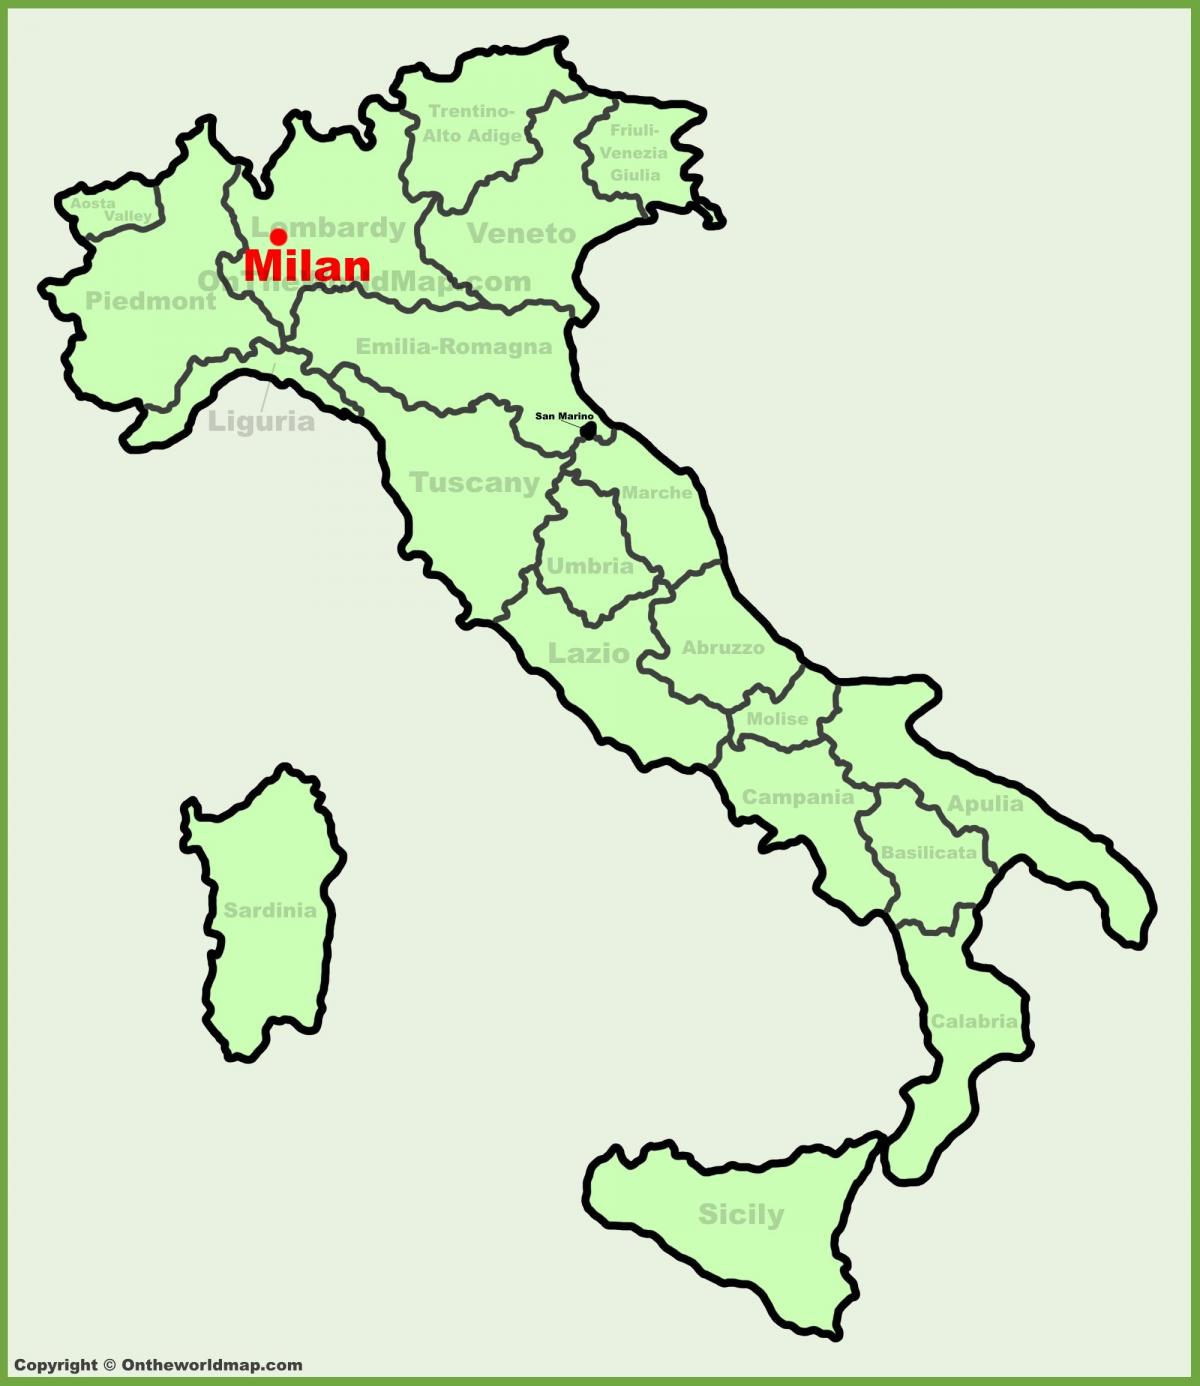 kart over italia viser milano